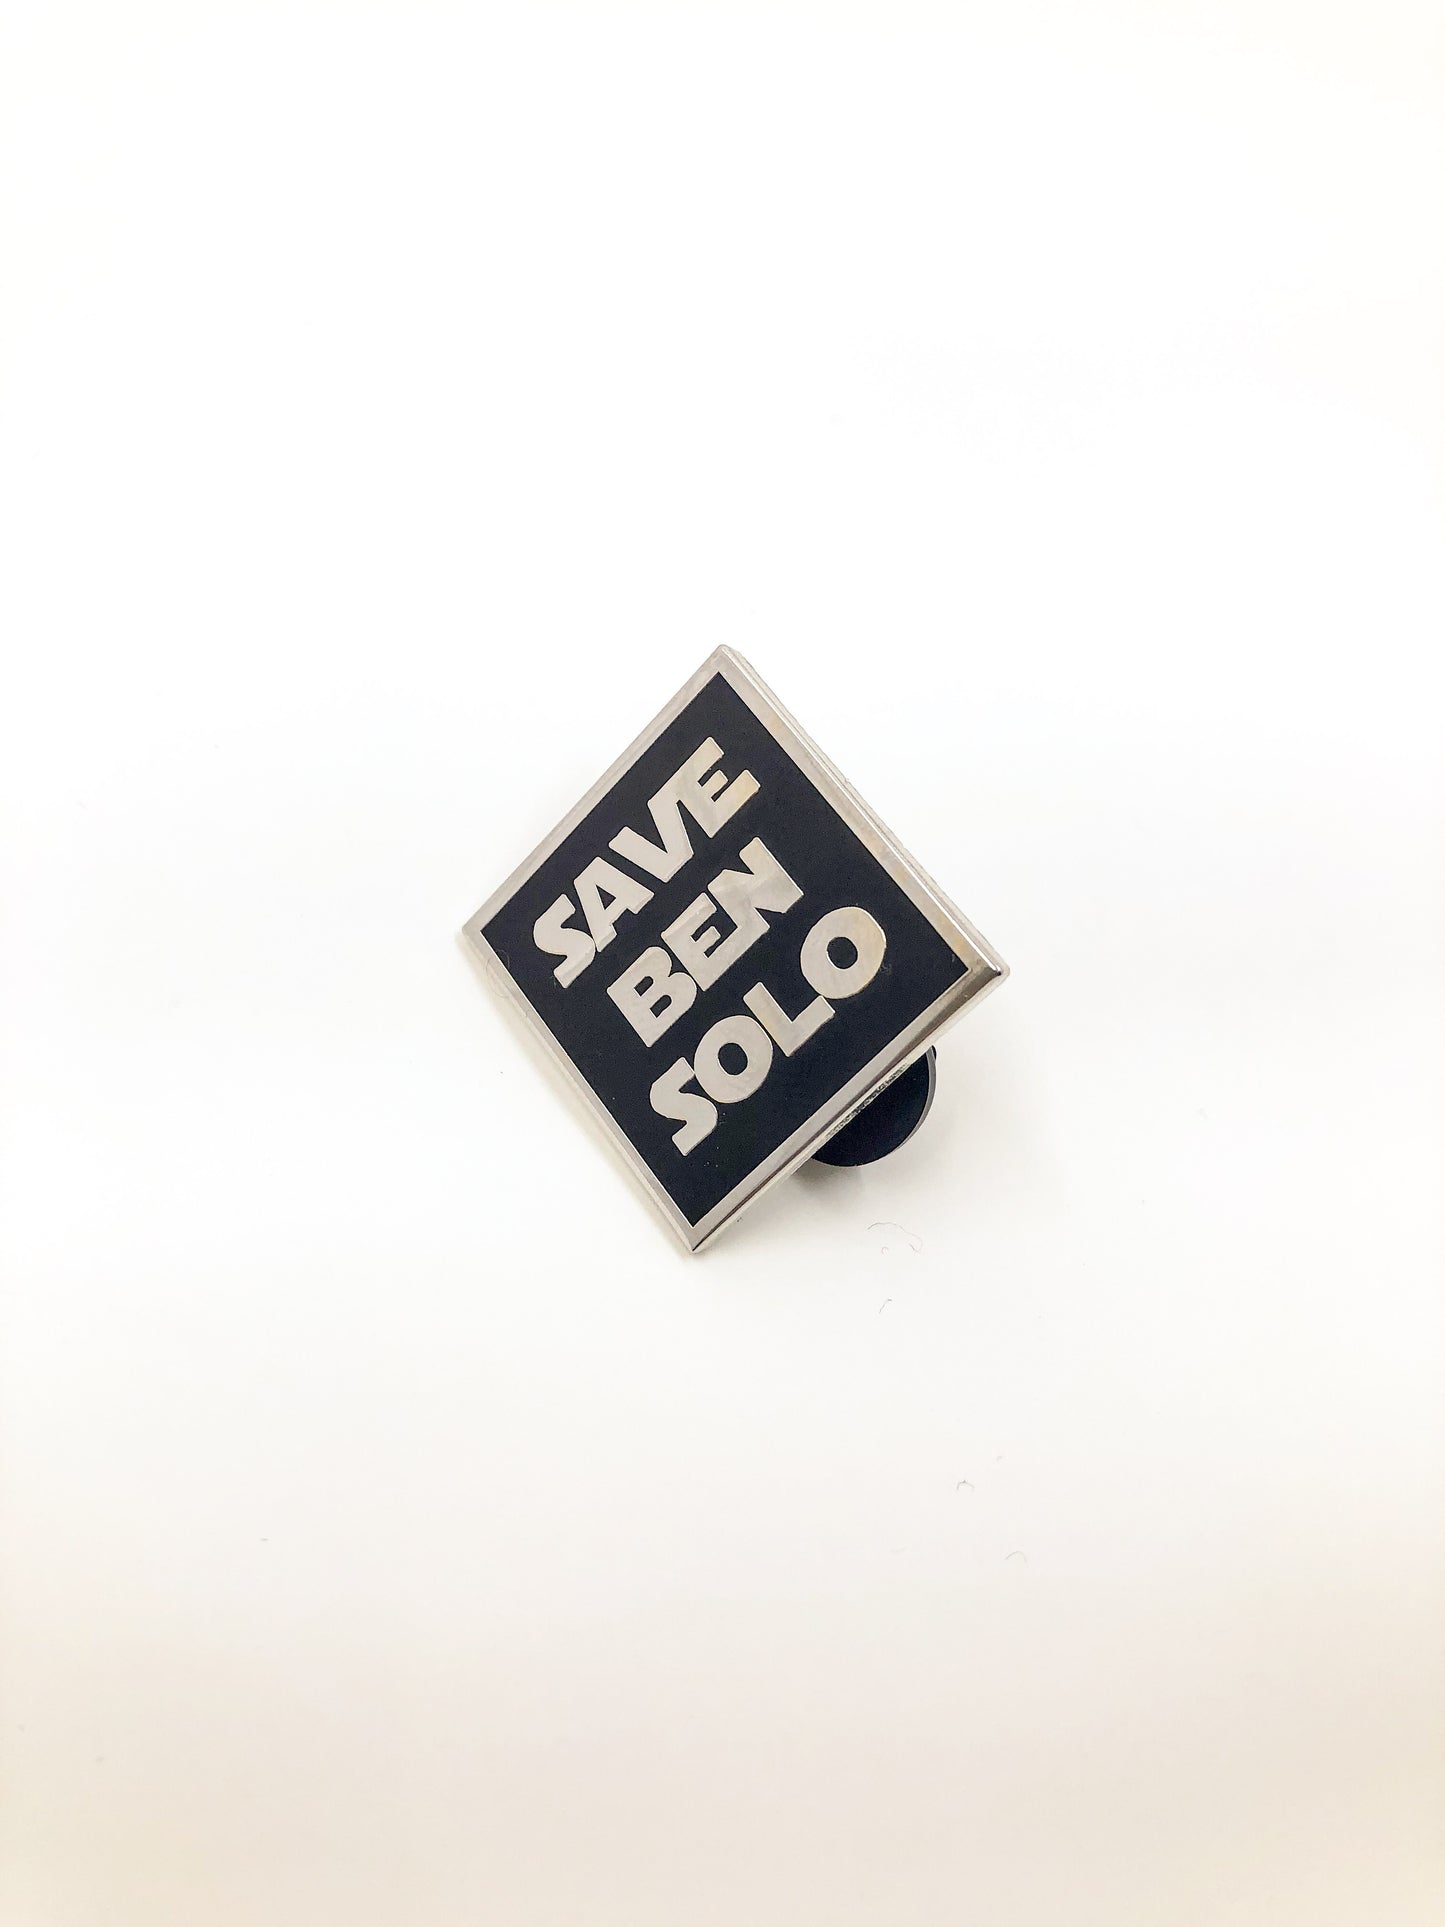 Save Ben Solo Hard Enamel Pin